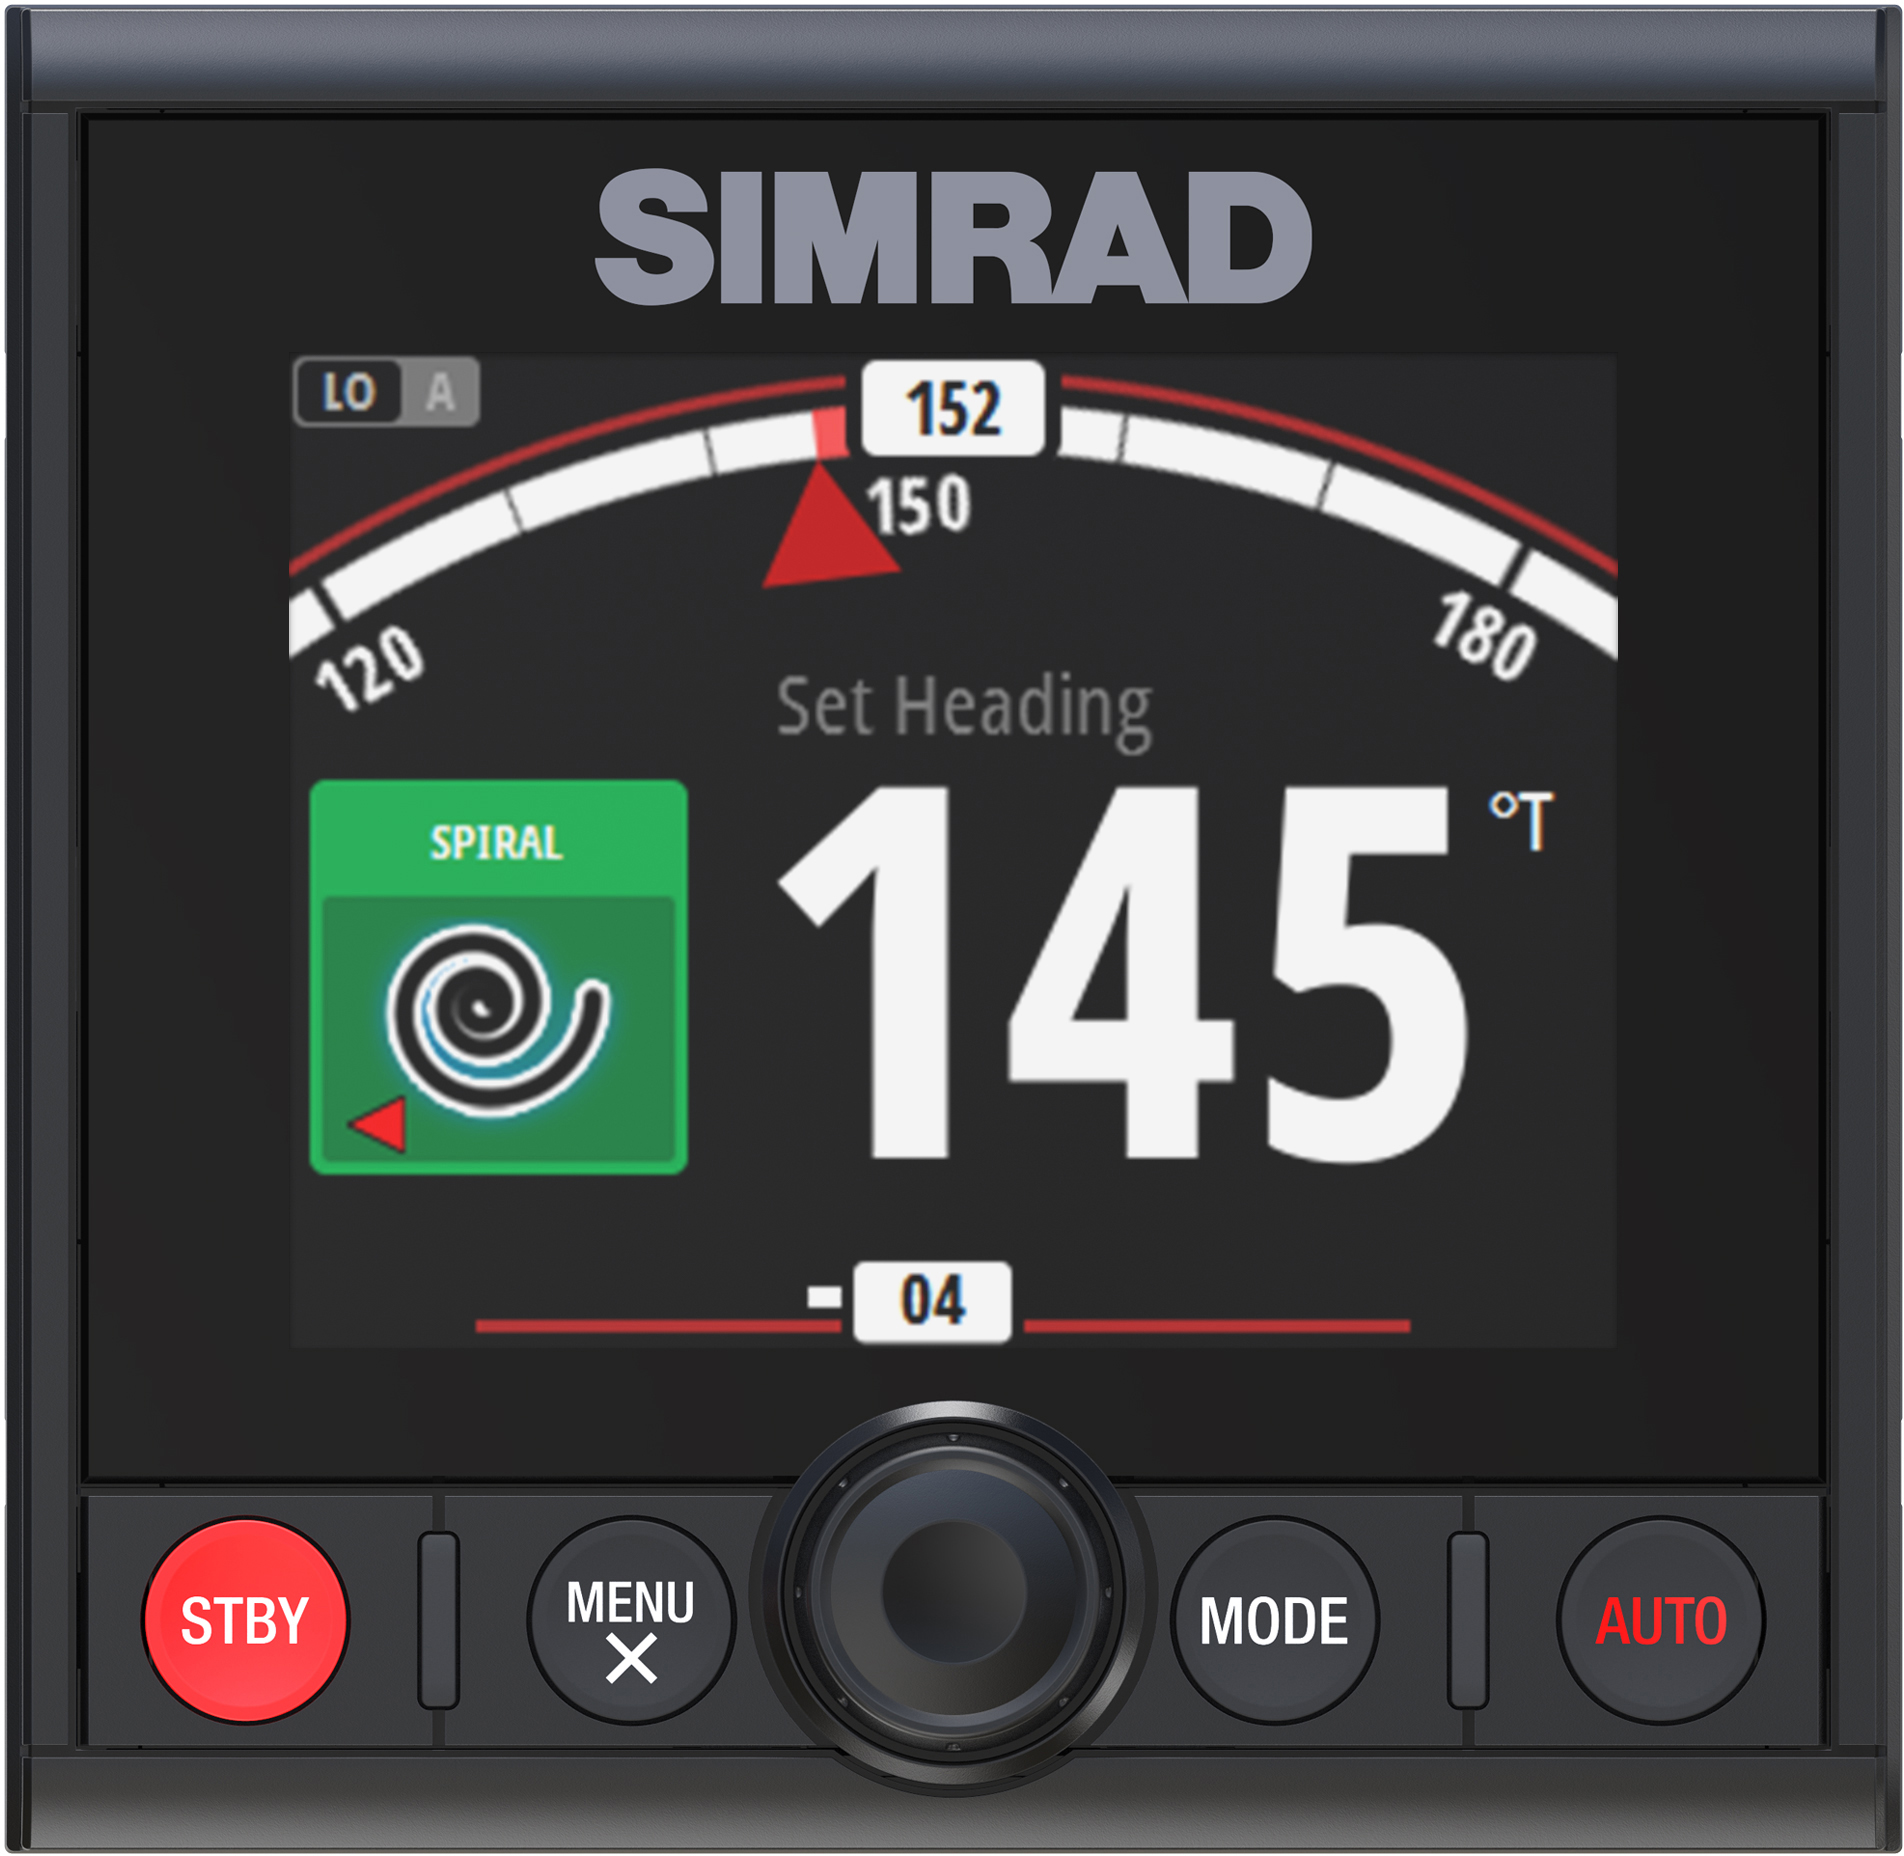 AP44 autopilotkontroller - Simrad